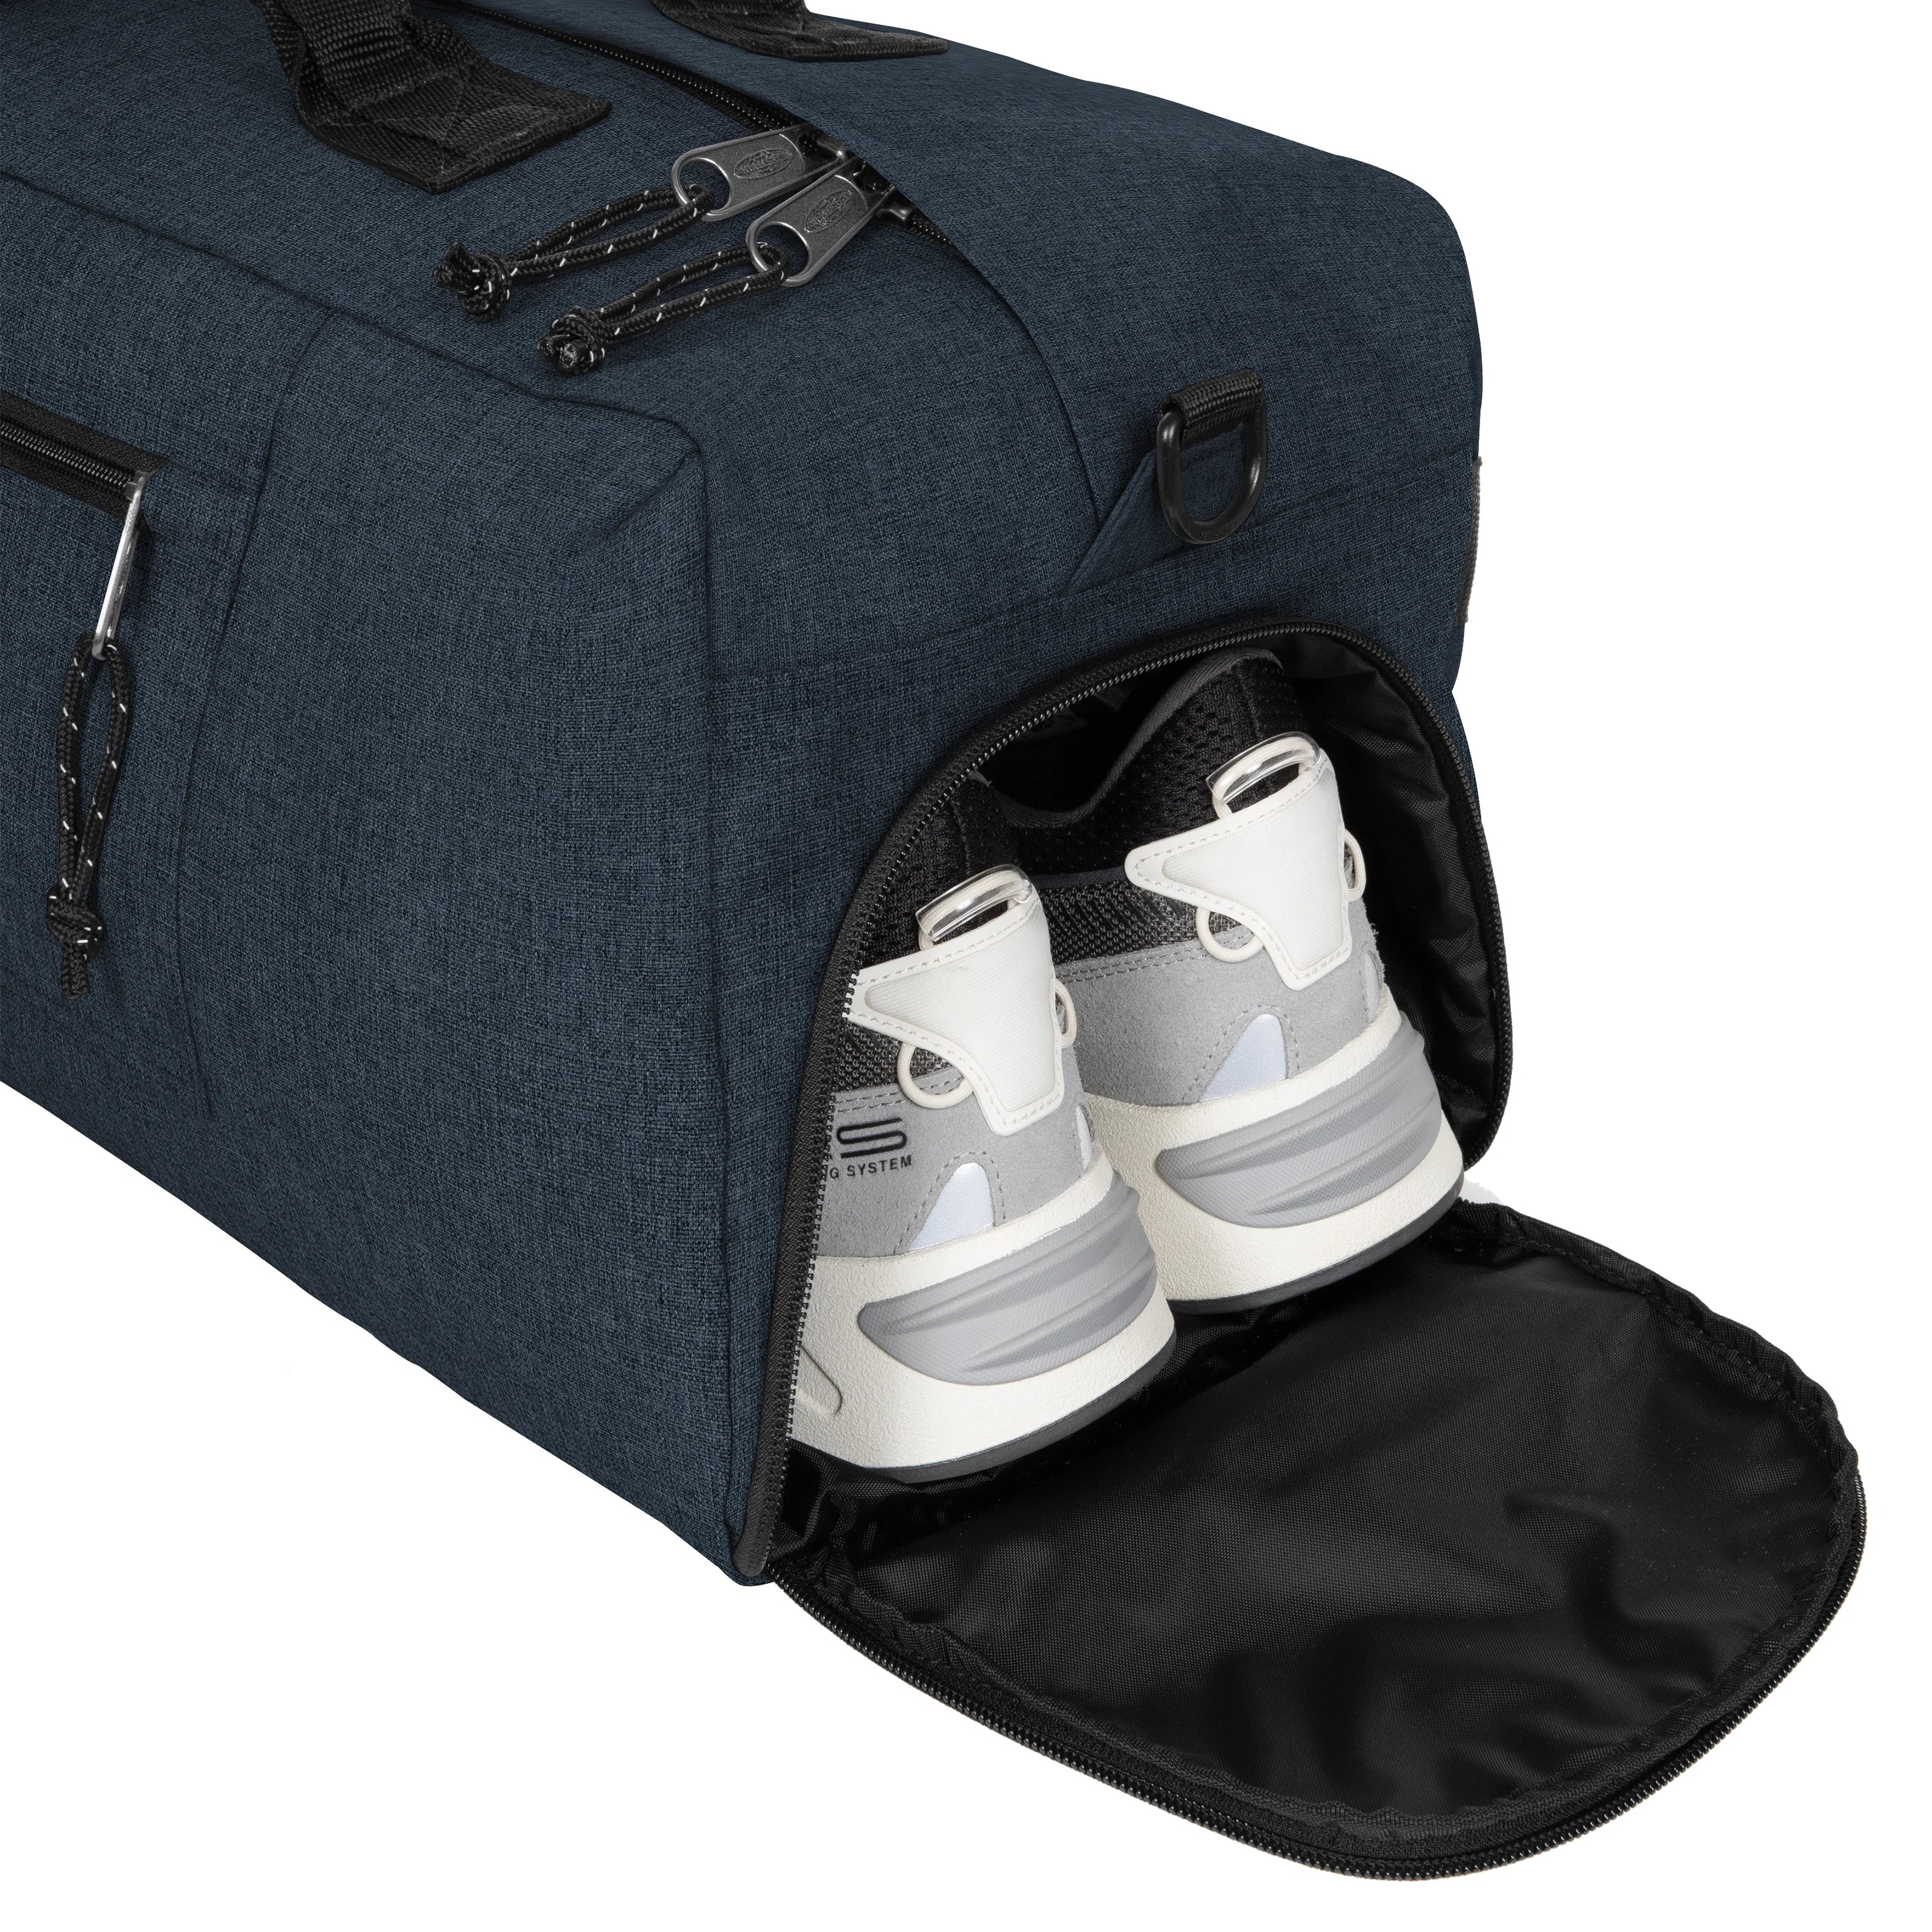 Eastpak Authentic Travel Duffl'r M Travel Bag 53 cm - Black